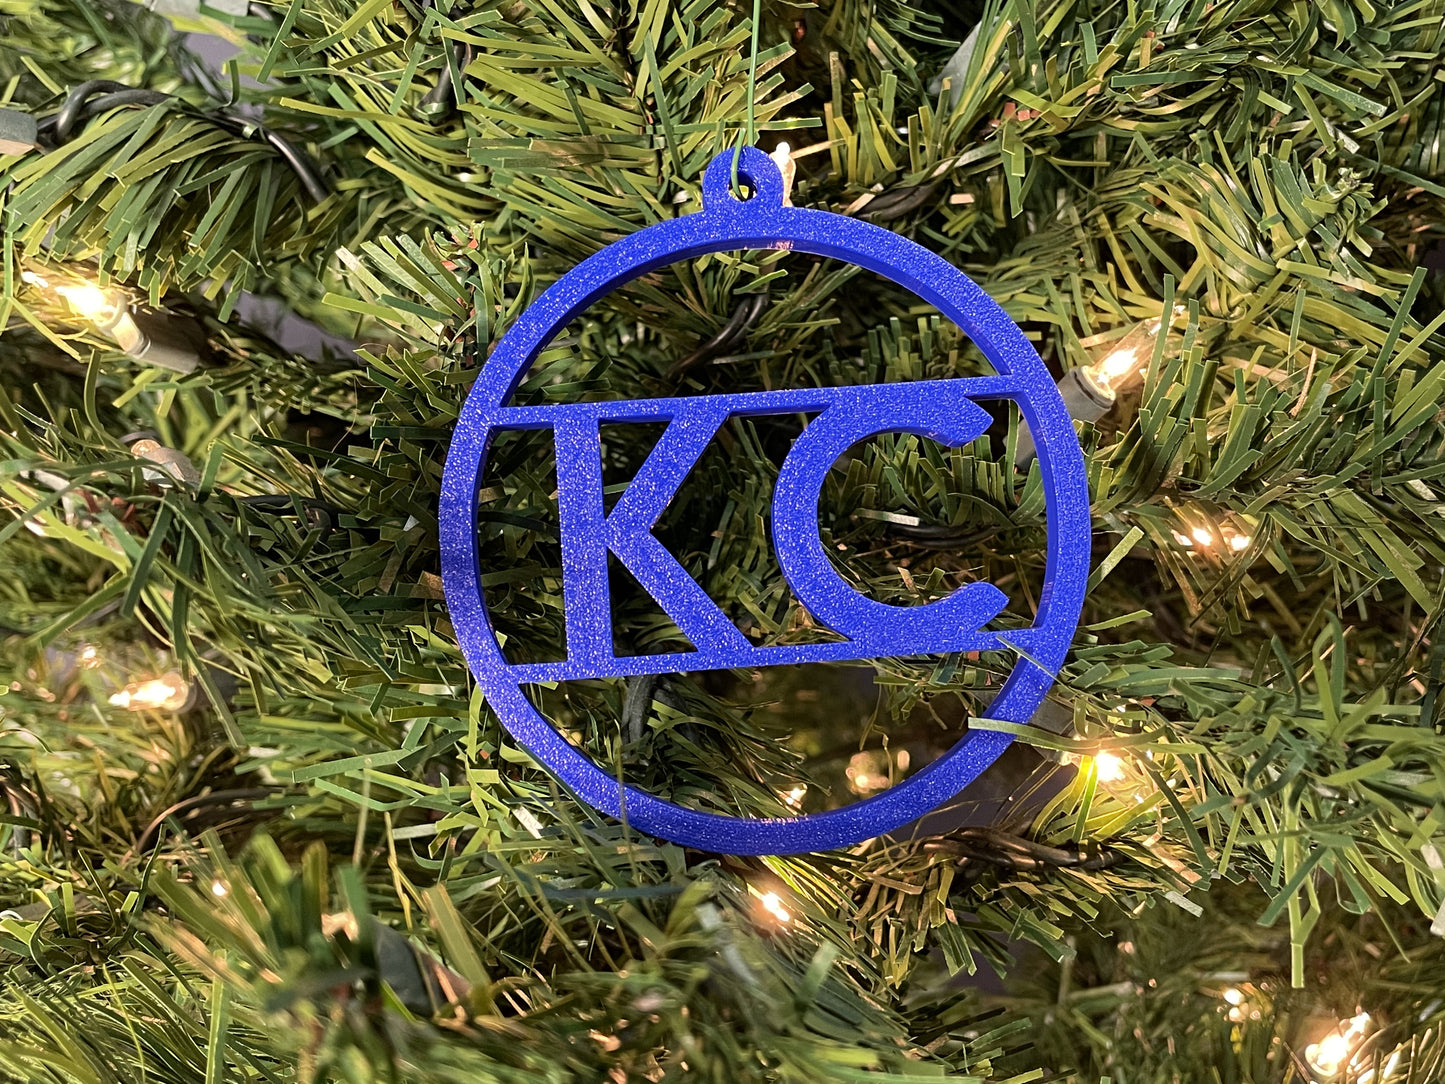 Kansas City Ornament